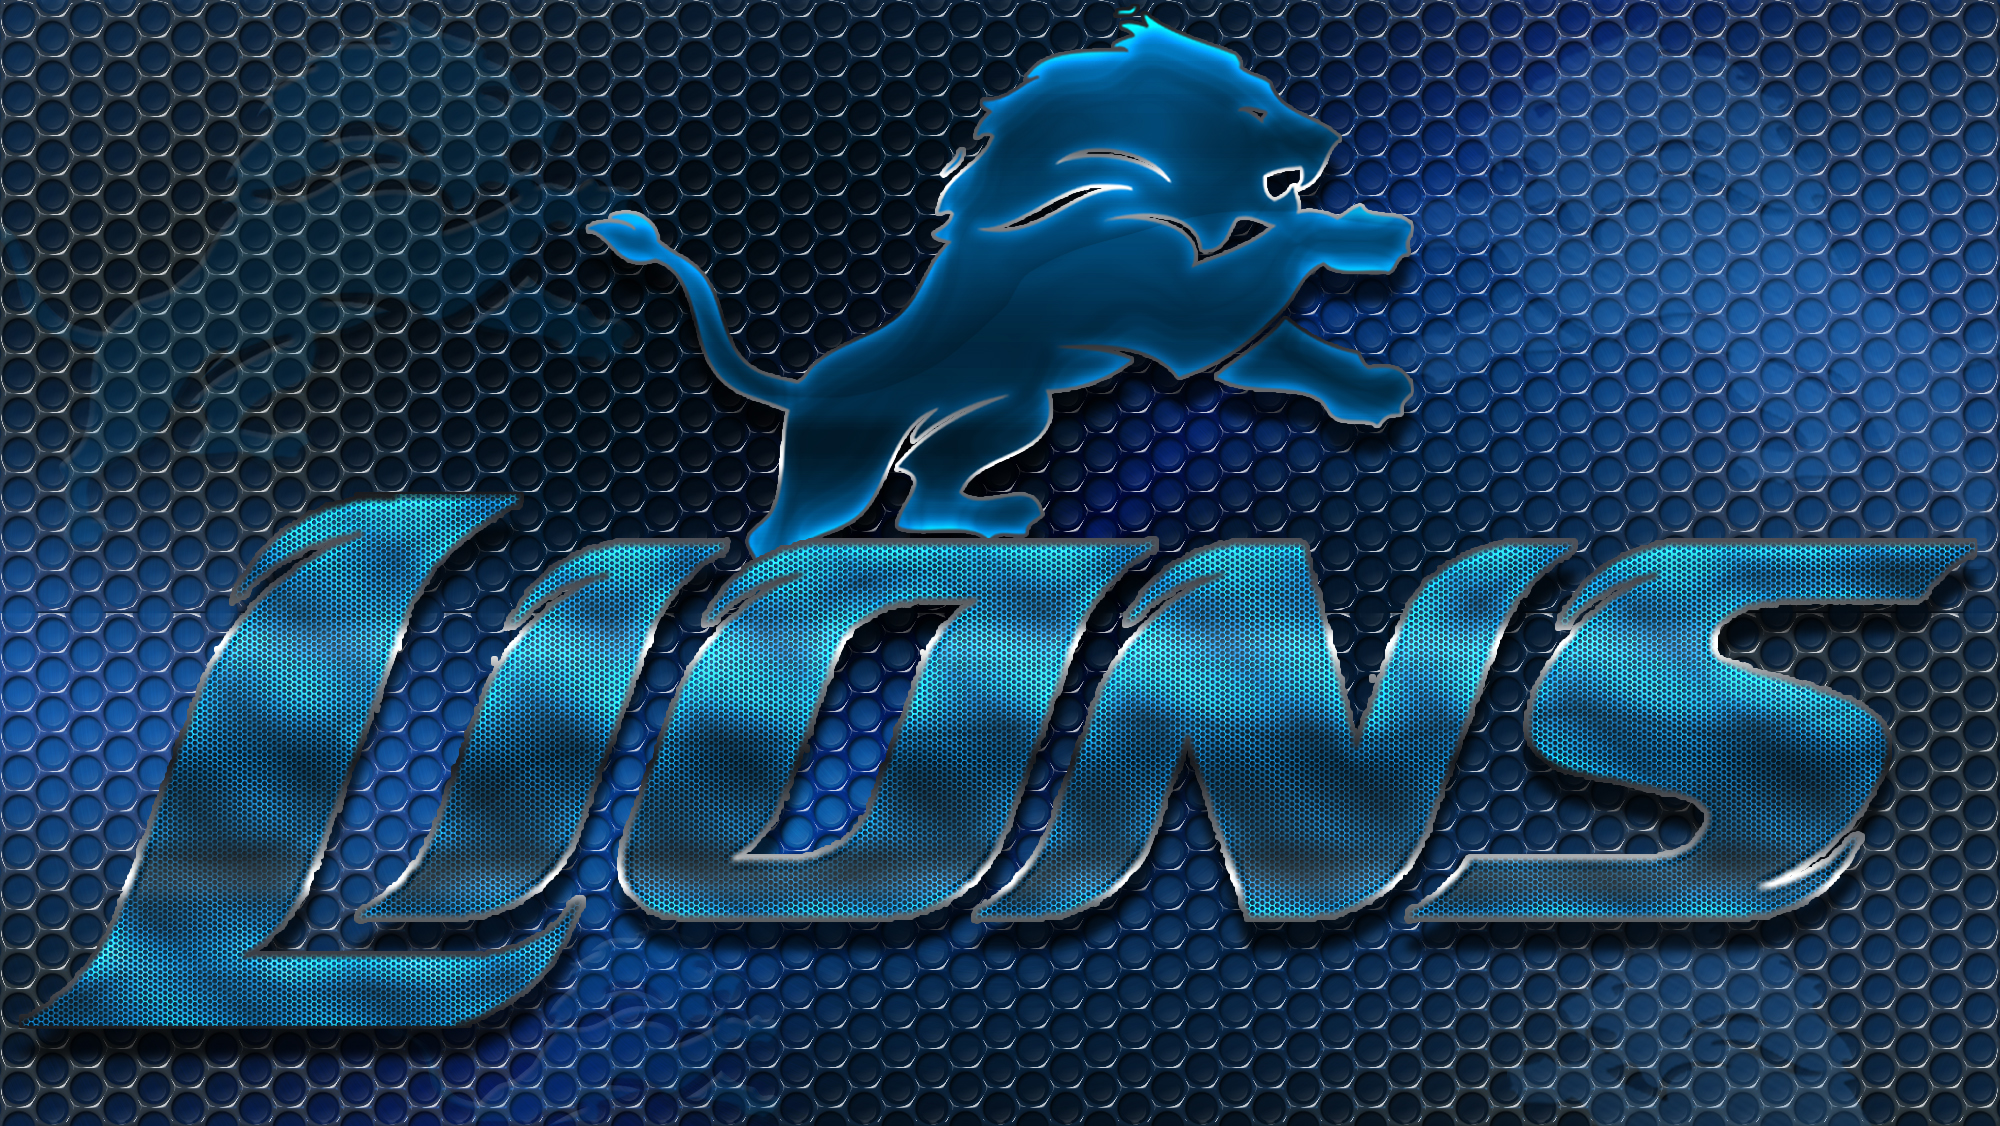 Detroit Lions Football Team Logo Wallpapers HD